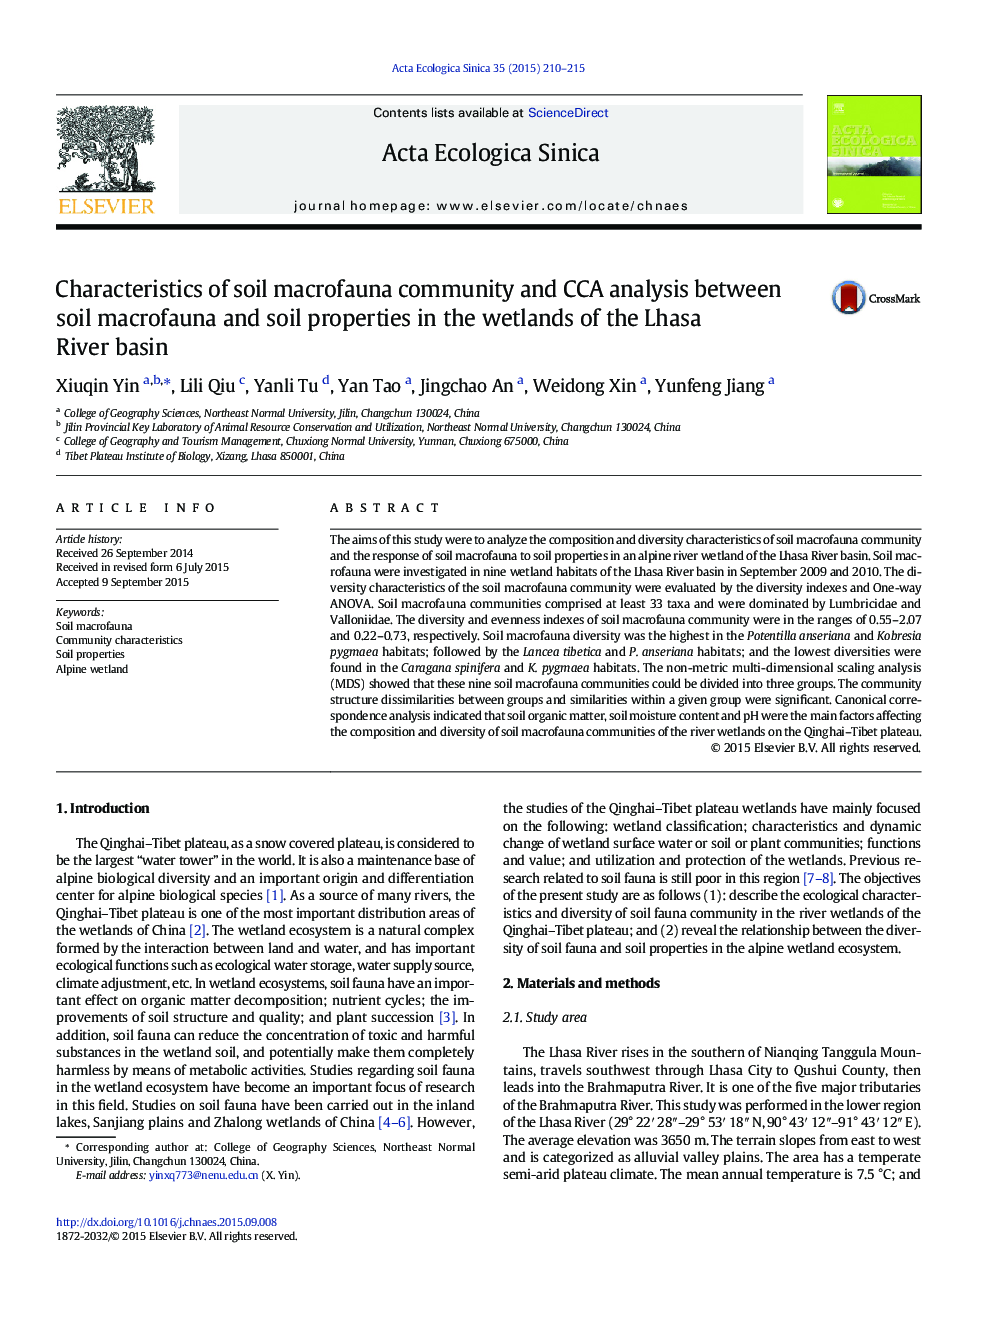 Characteristics of soil macrofauna community and CCA analysis between soil macrofauna and soil properties in the wetlands of the Lhasa River basin